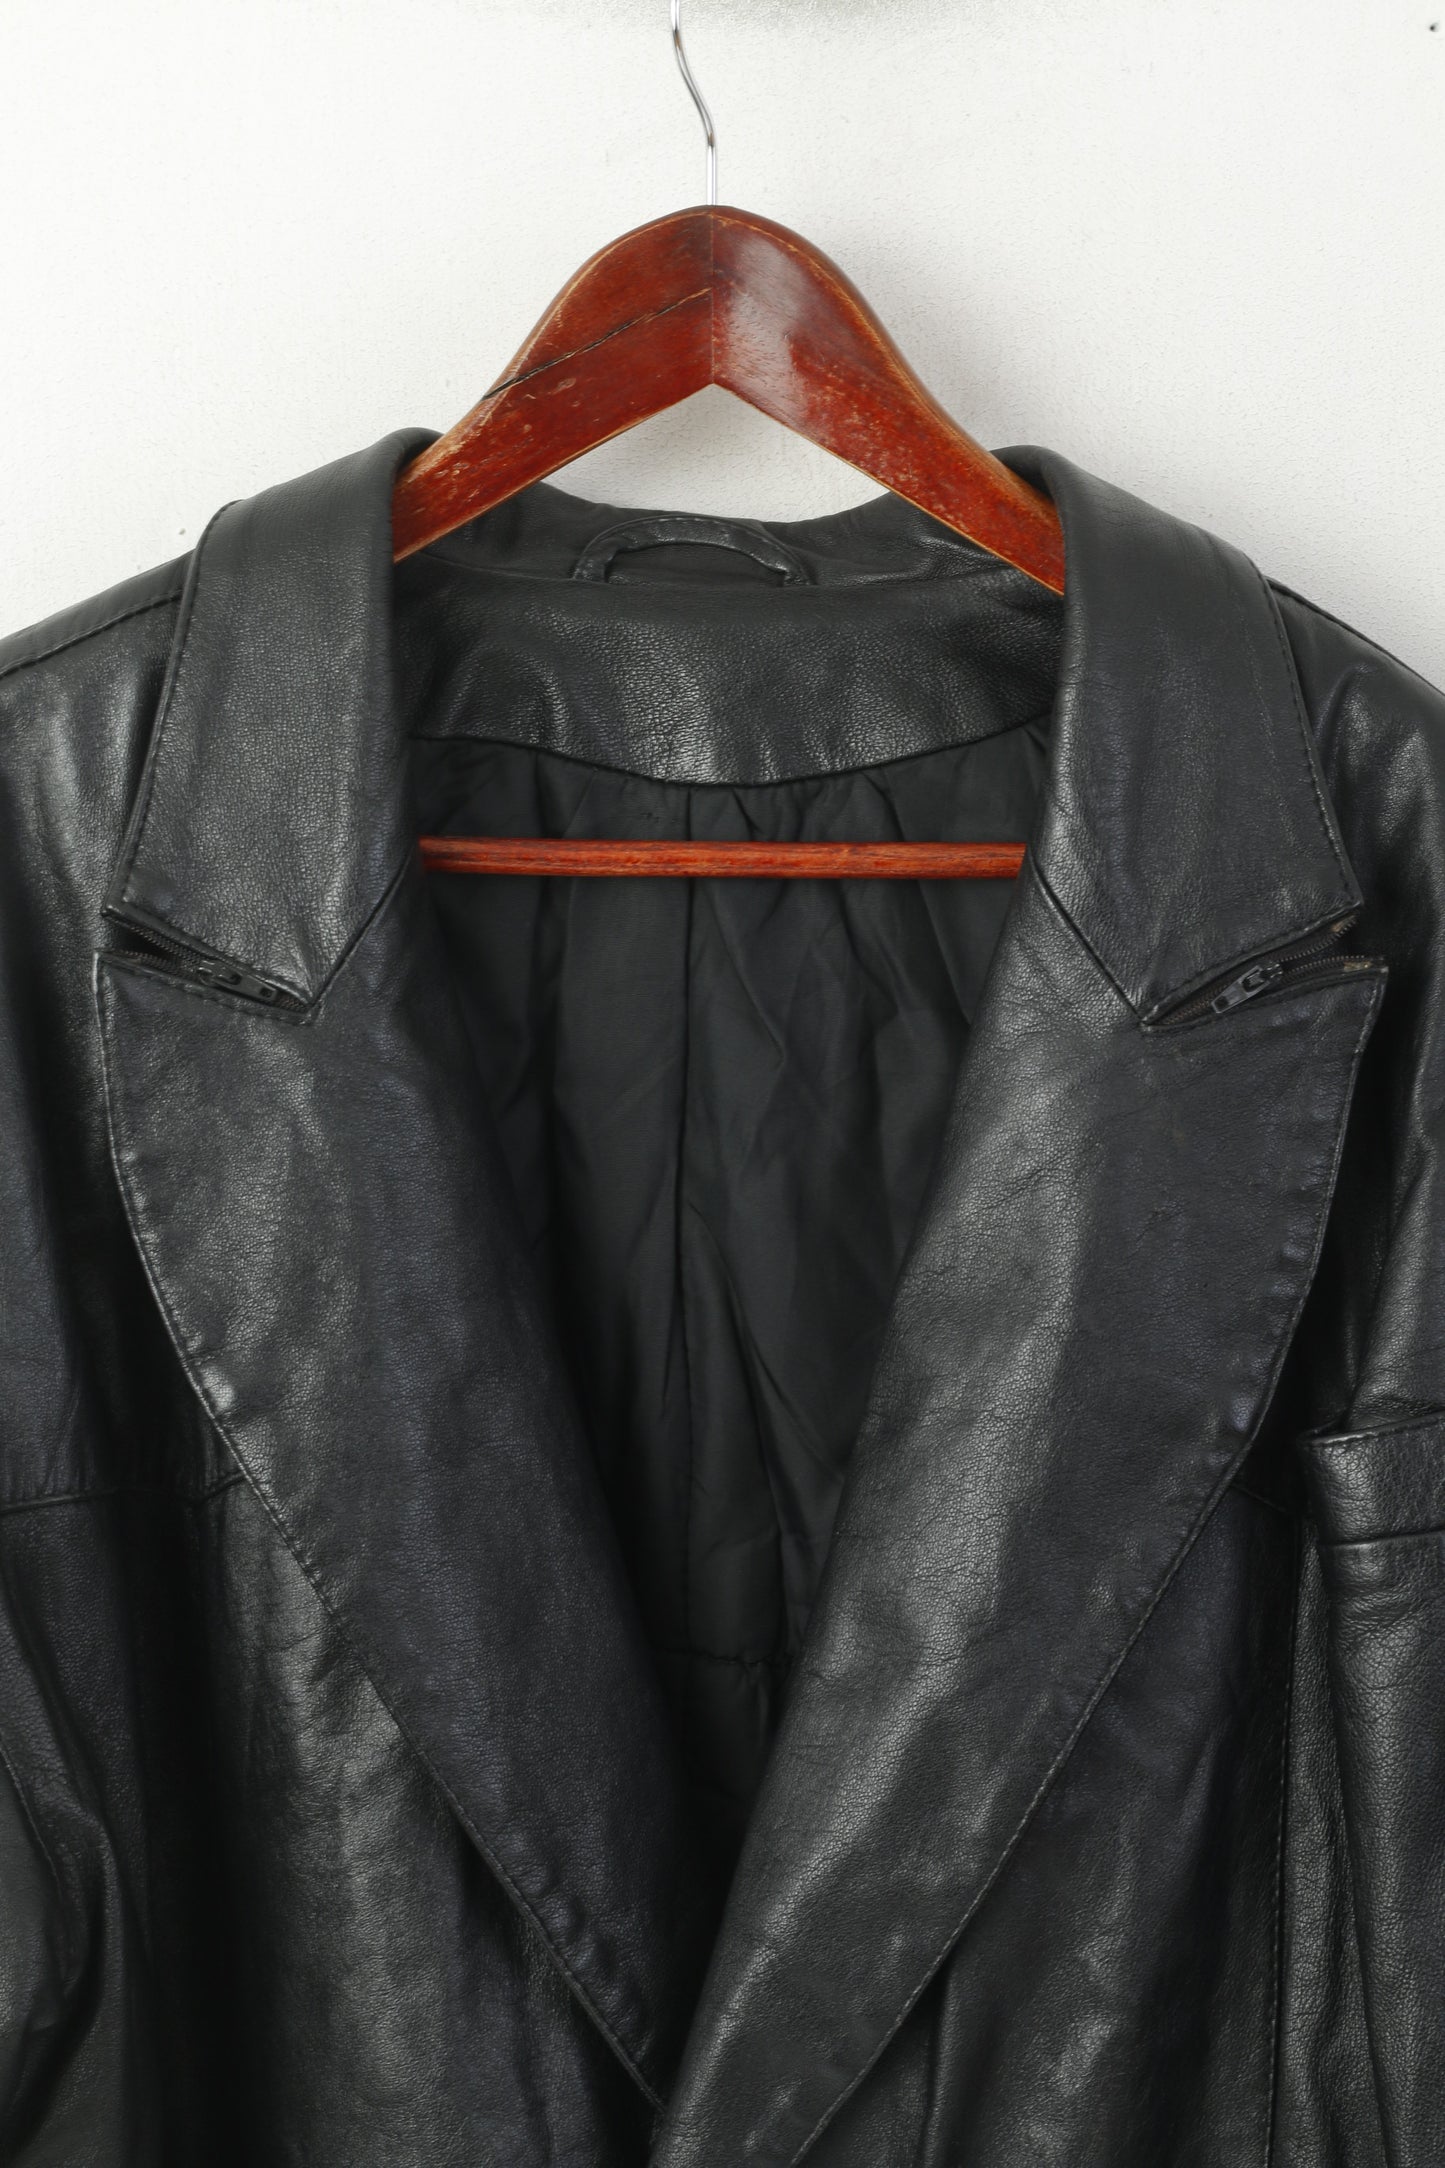 Stephano Women XL Jacket Black Leather Bomber Padded Western Vintage 90s Top